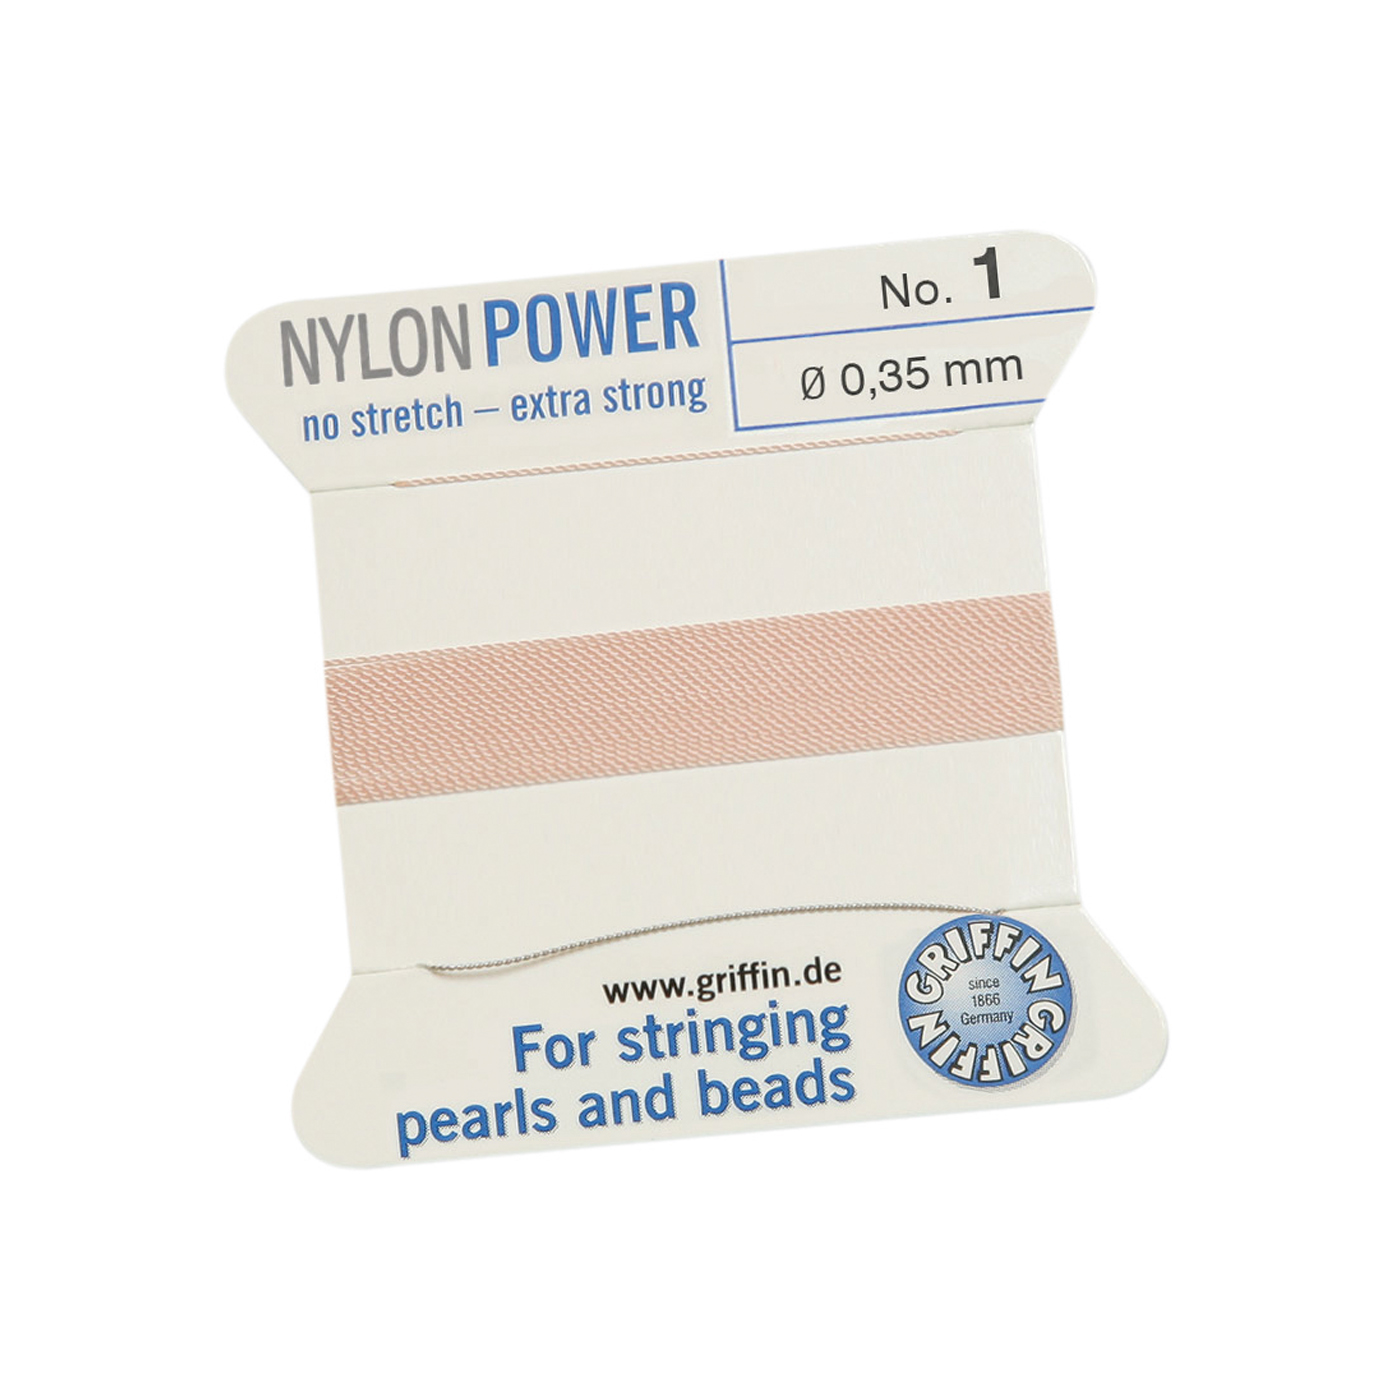 Bead Cord NylonPower, Light Pink, No. 1 - 2 m